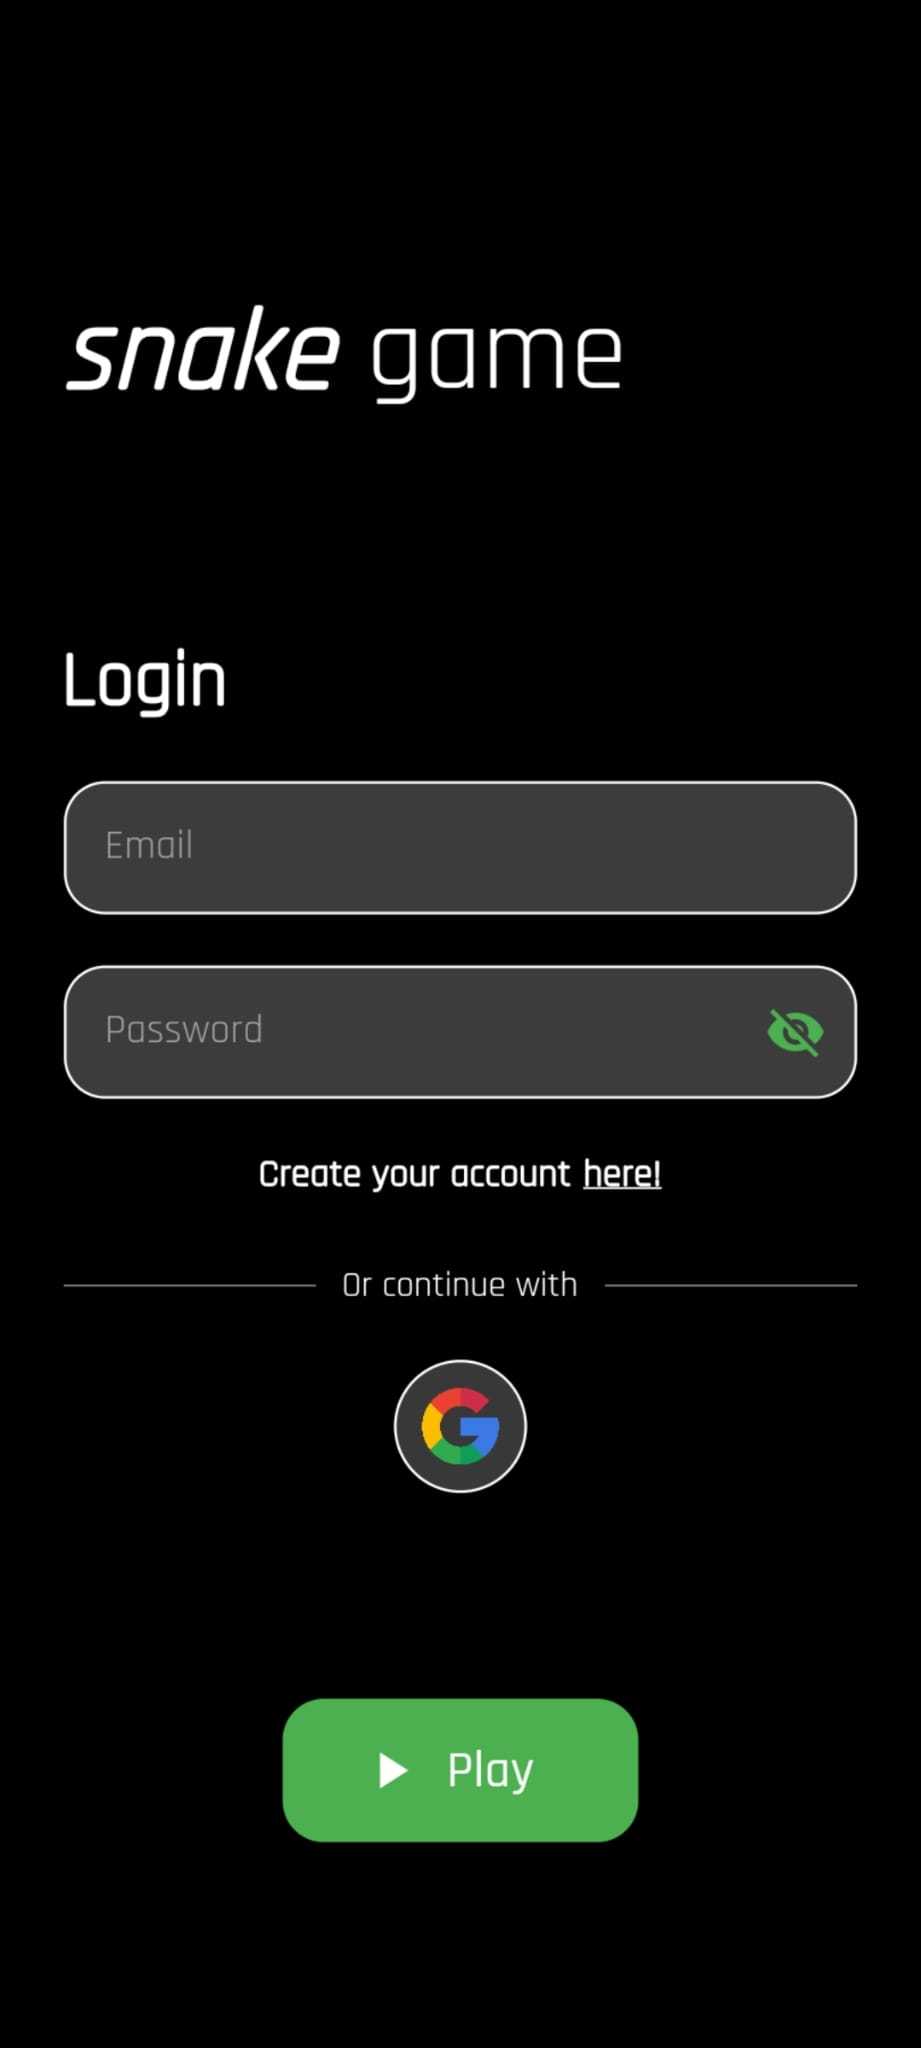 Gioco del serpente Gioca all app per Android versione mobile Android iOS  apk scarica gratis-TapTap